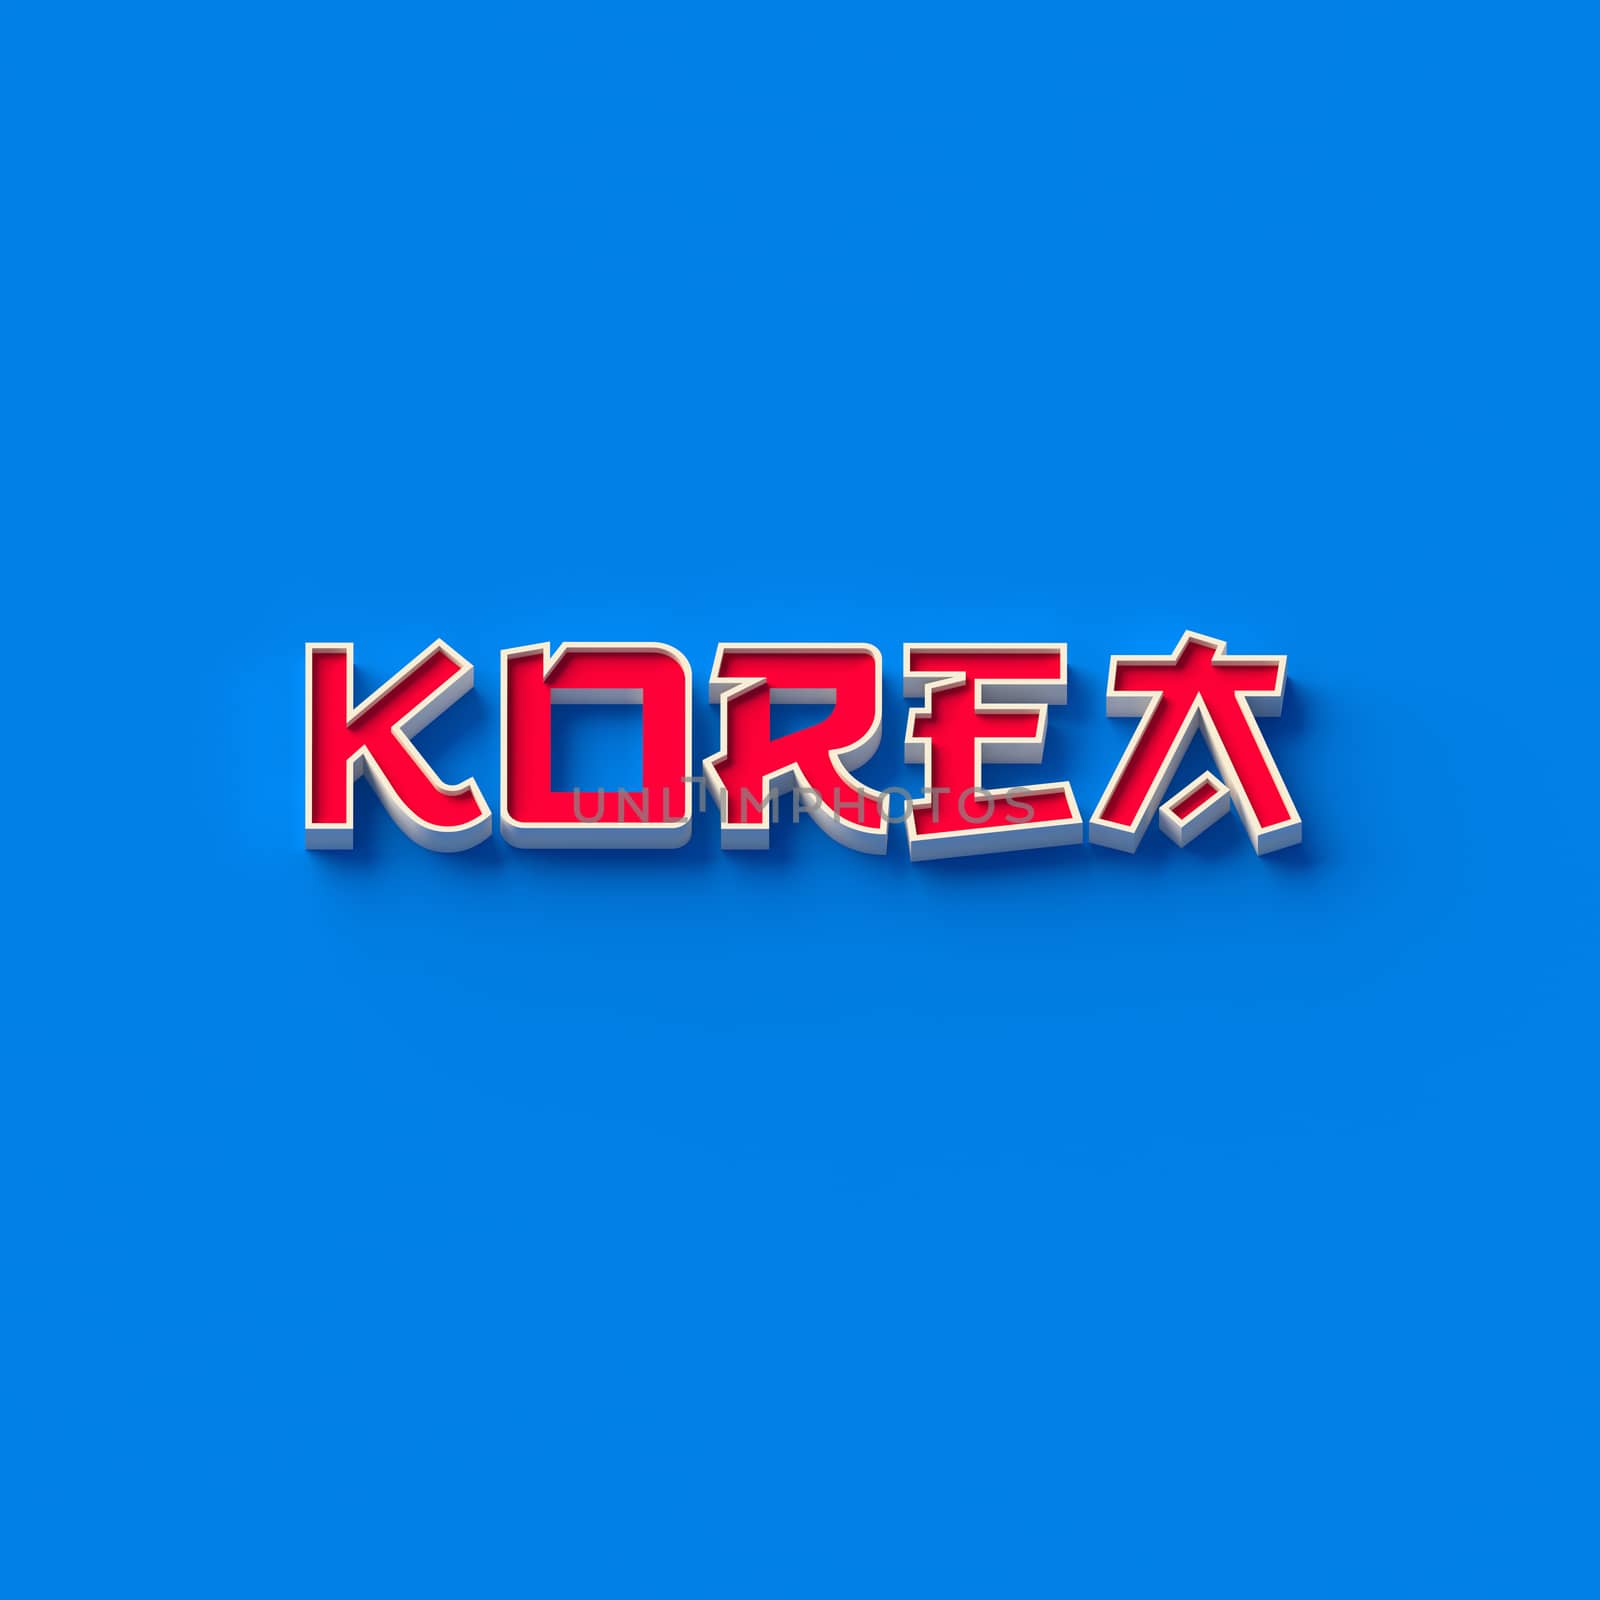 3D RENDERING WORDS "KOREA" ON BLUE PLAIN BACKGROUND